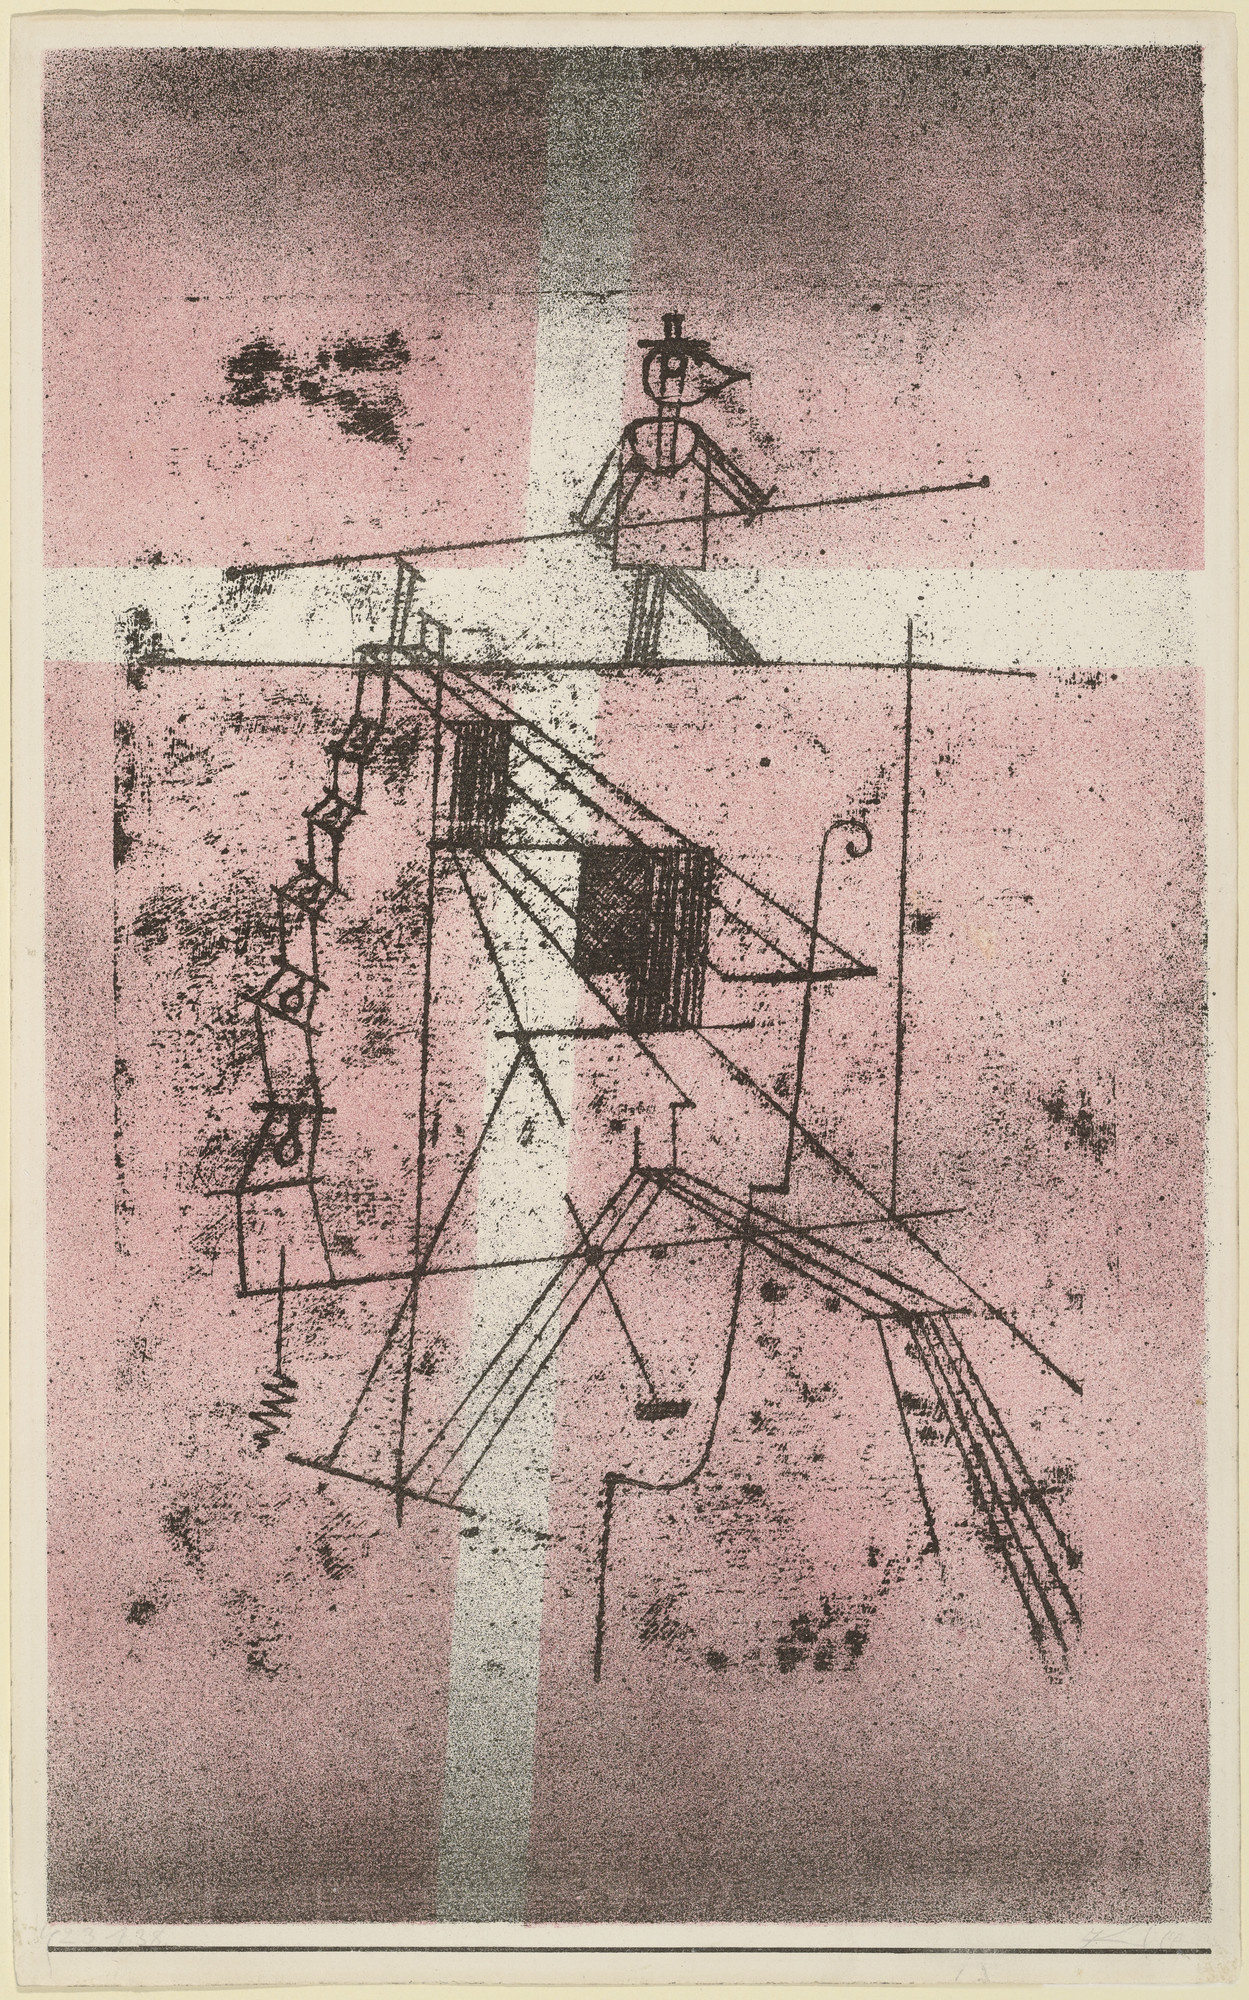 Three Masters of the Bauhaus: Lyonel Feininger, Vasily Kandinsky